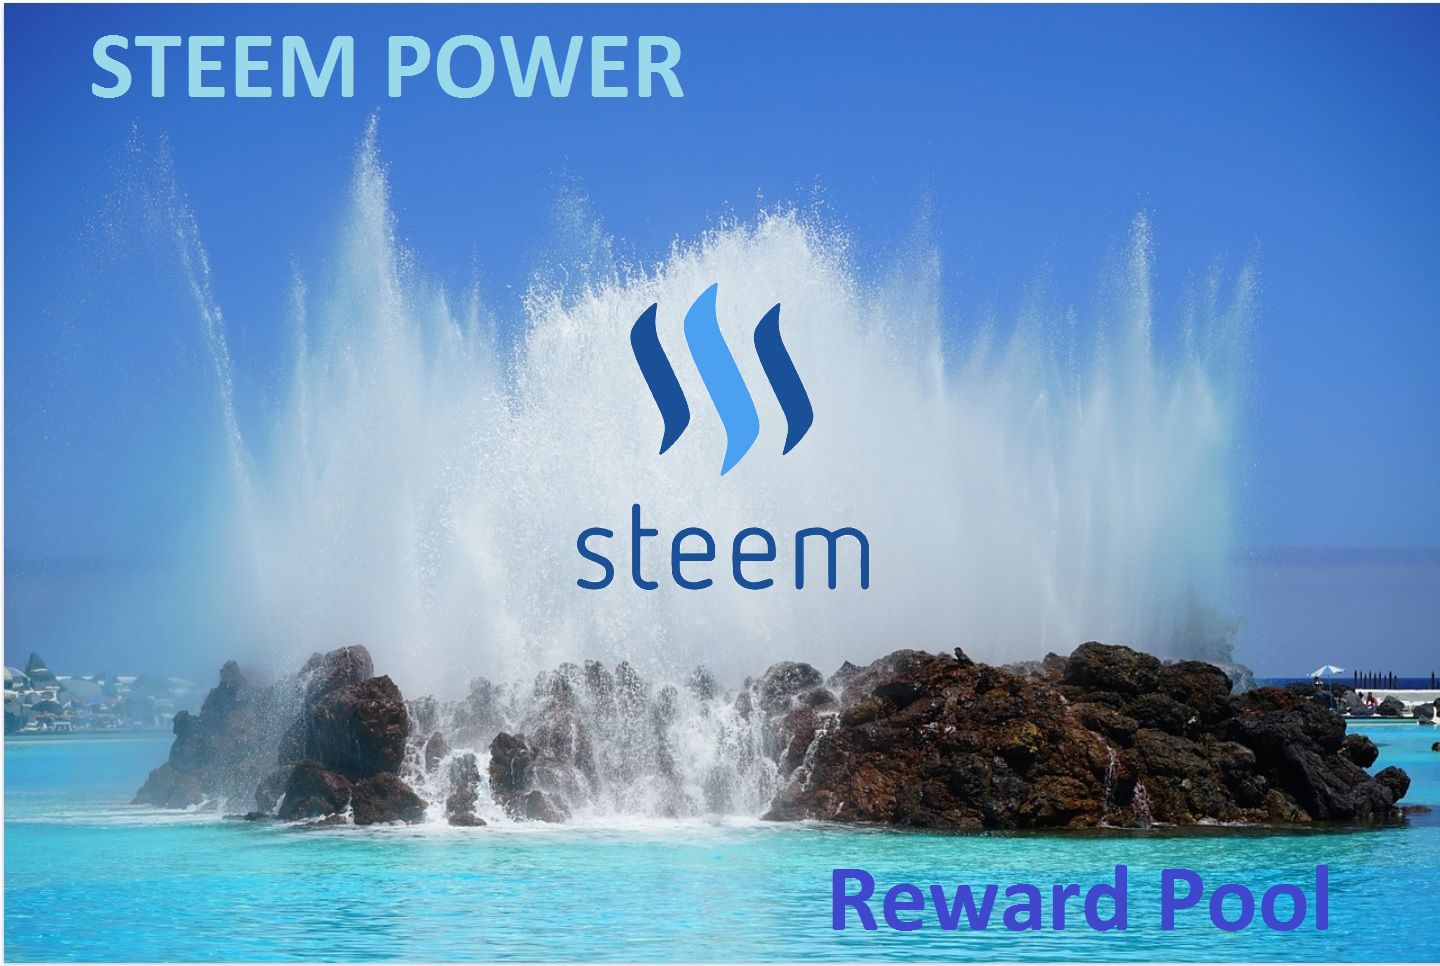 Reward Pool Steem Power - Steemit - Steem Blockchain.jpg